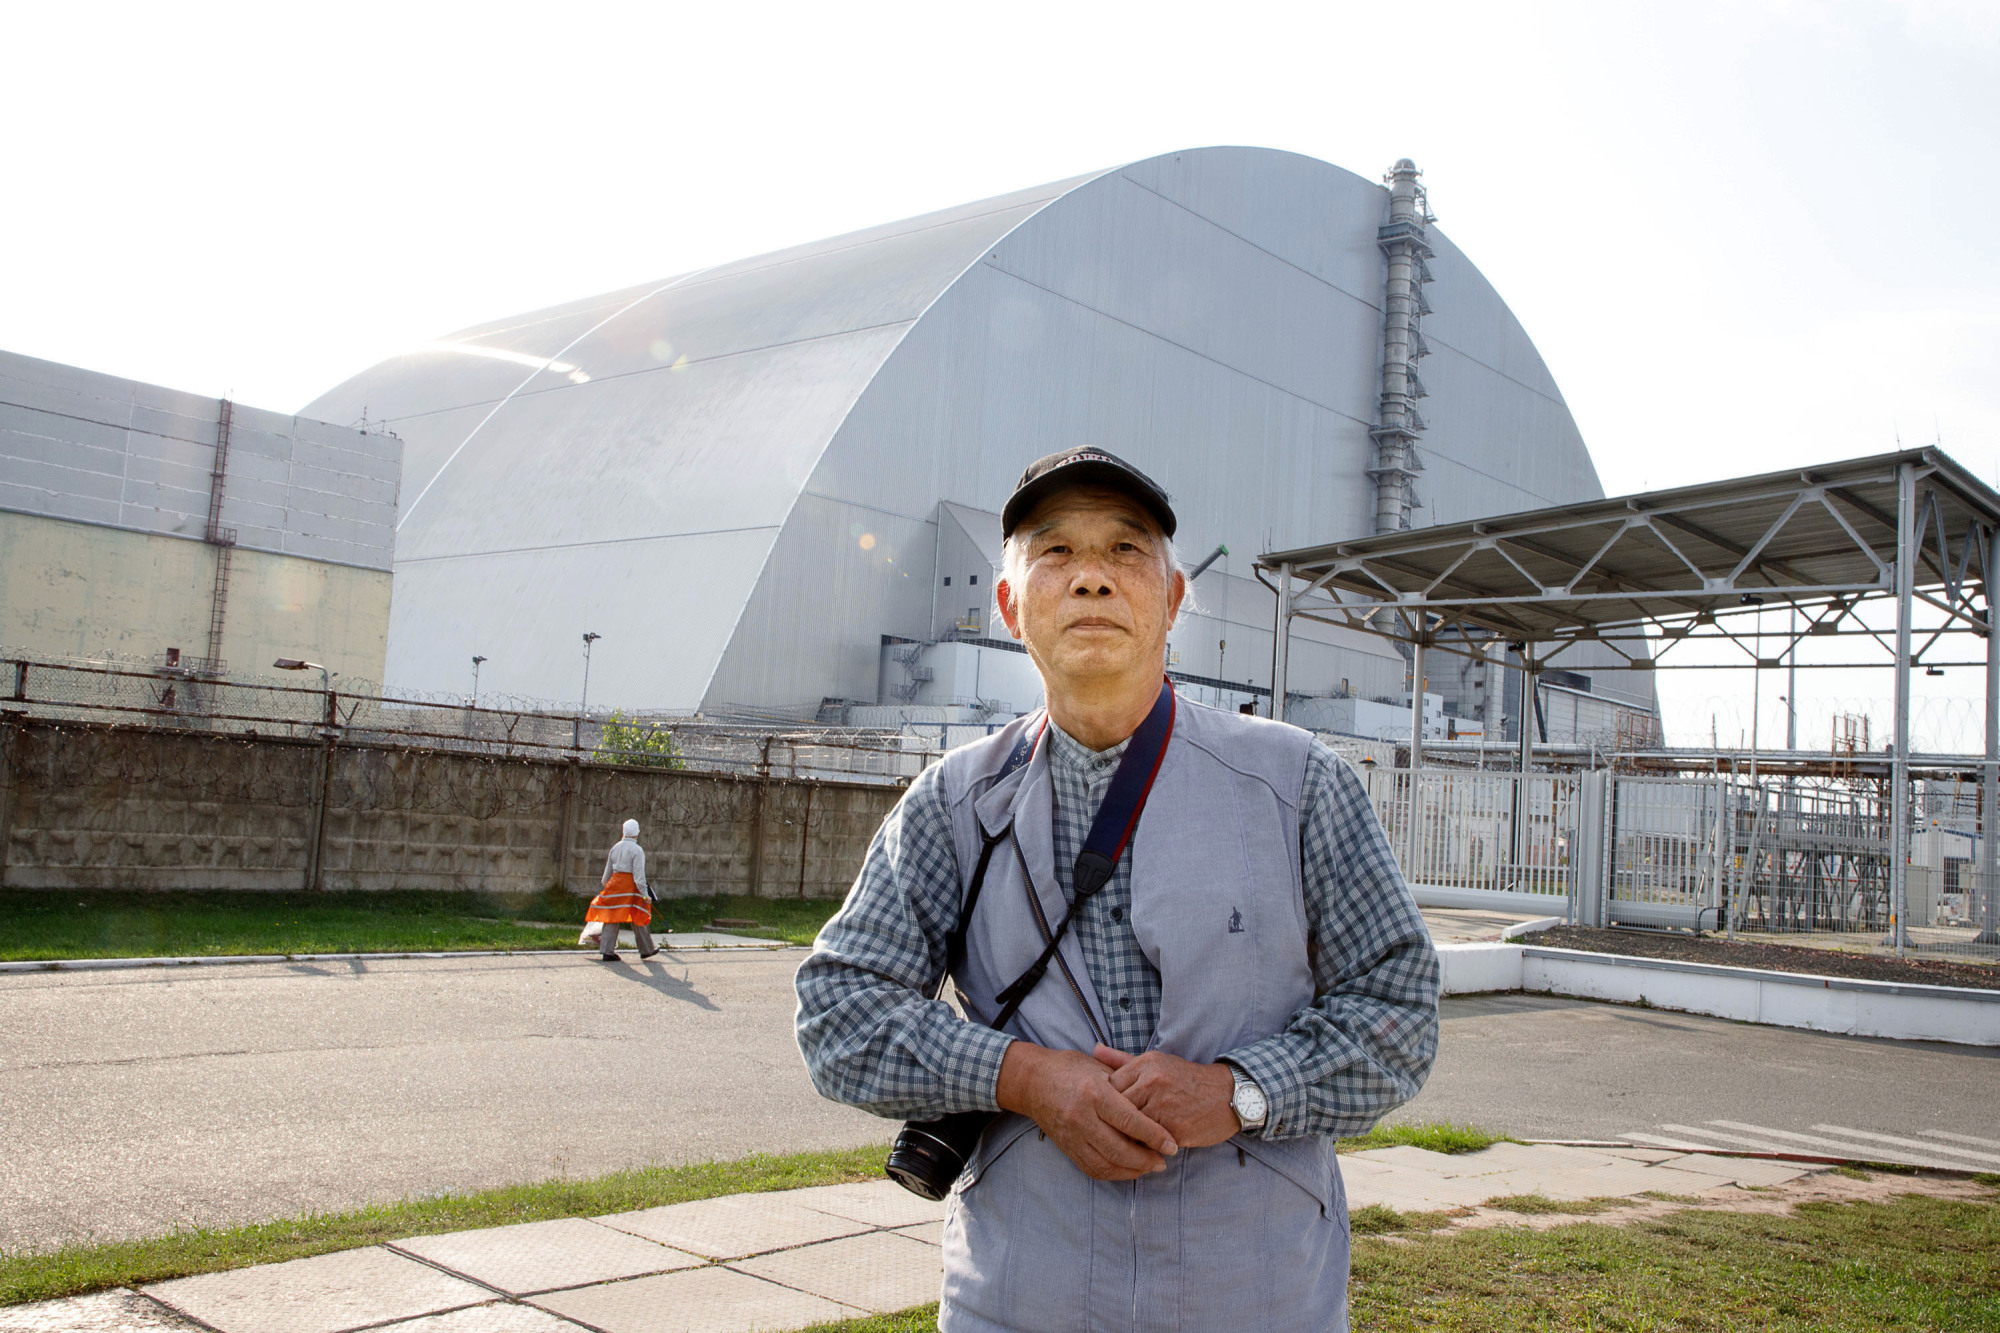 Nagasaki atomic bomb survivor Hiroshi Suenaga stands outside unit 4 of the Chernobyl nuclear power plant in Ukraine in September. | YOSHINO OISHI / VIA KYODO